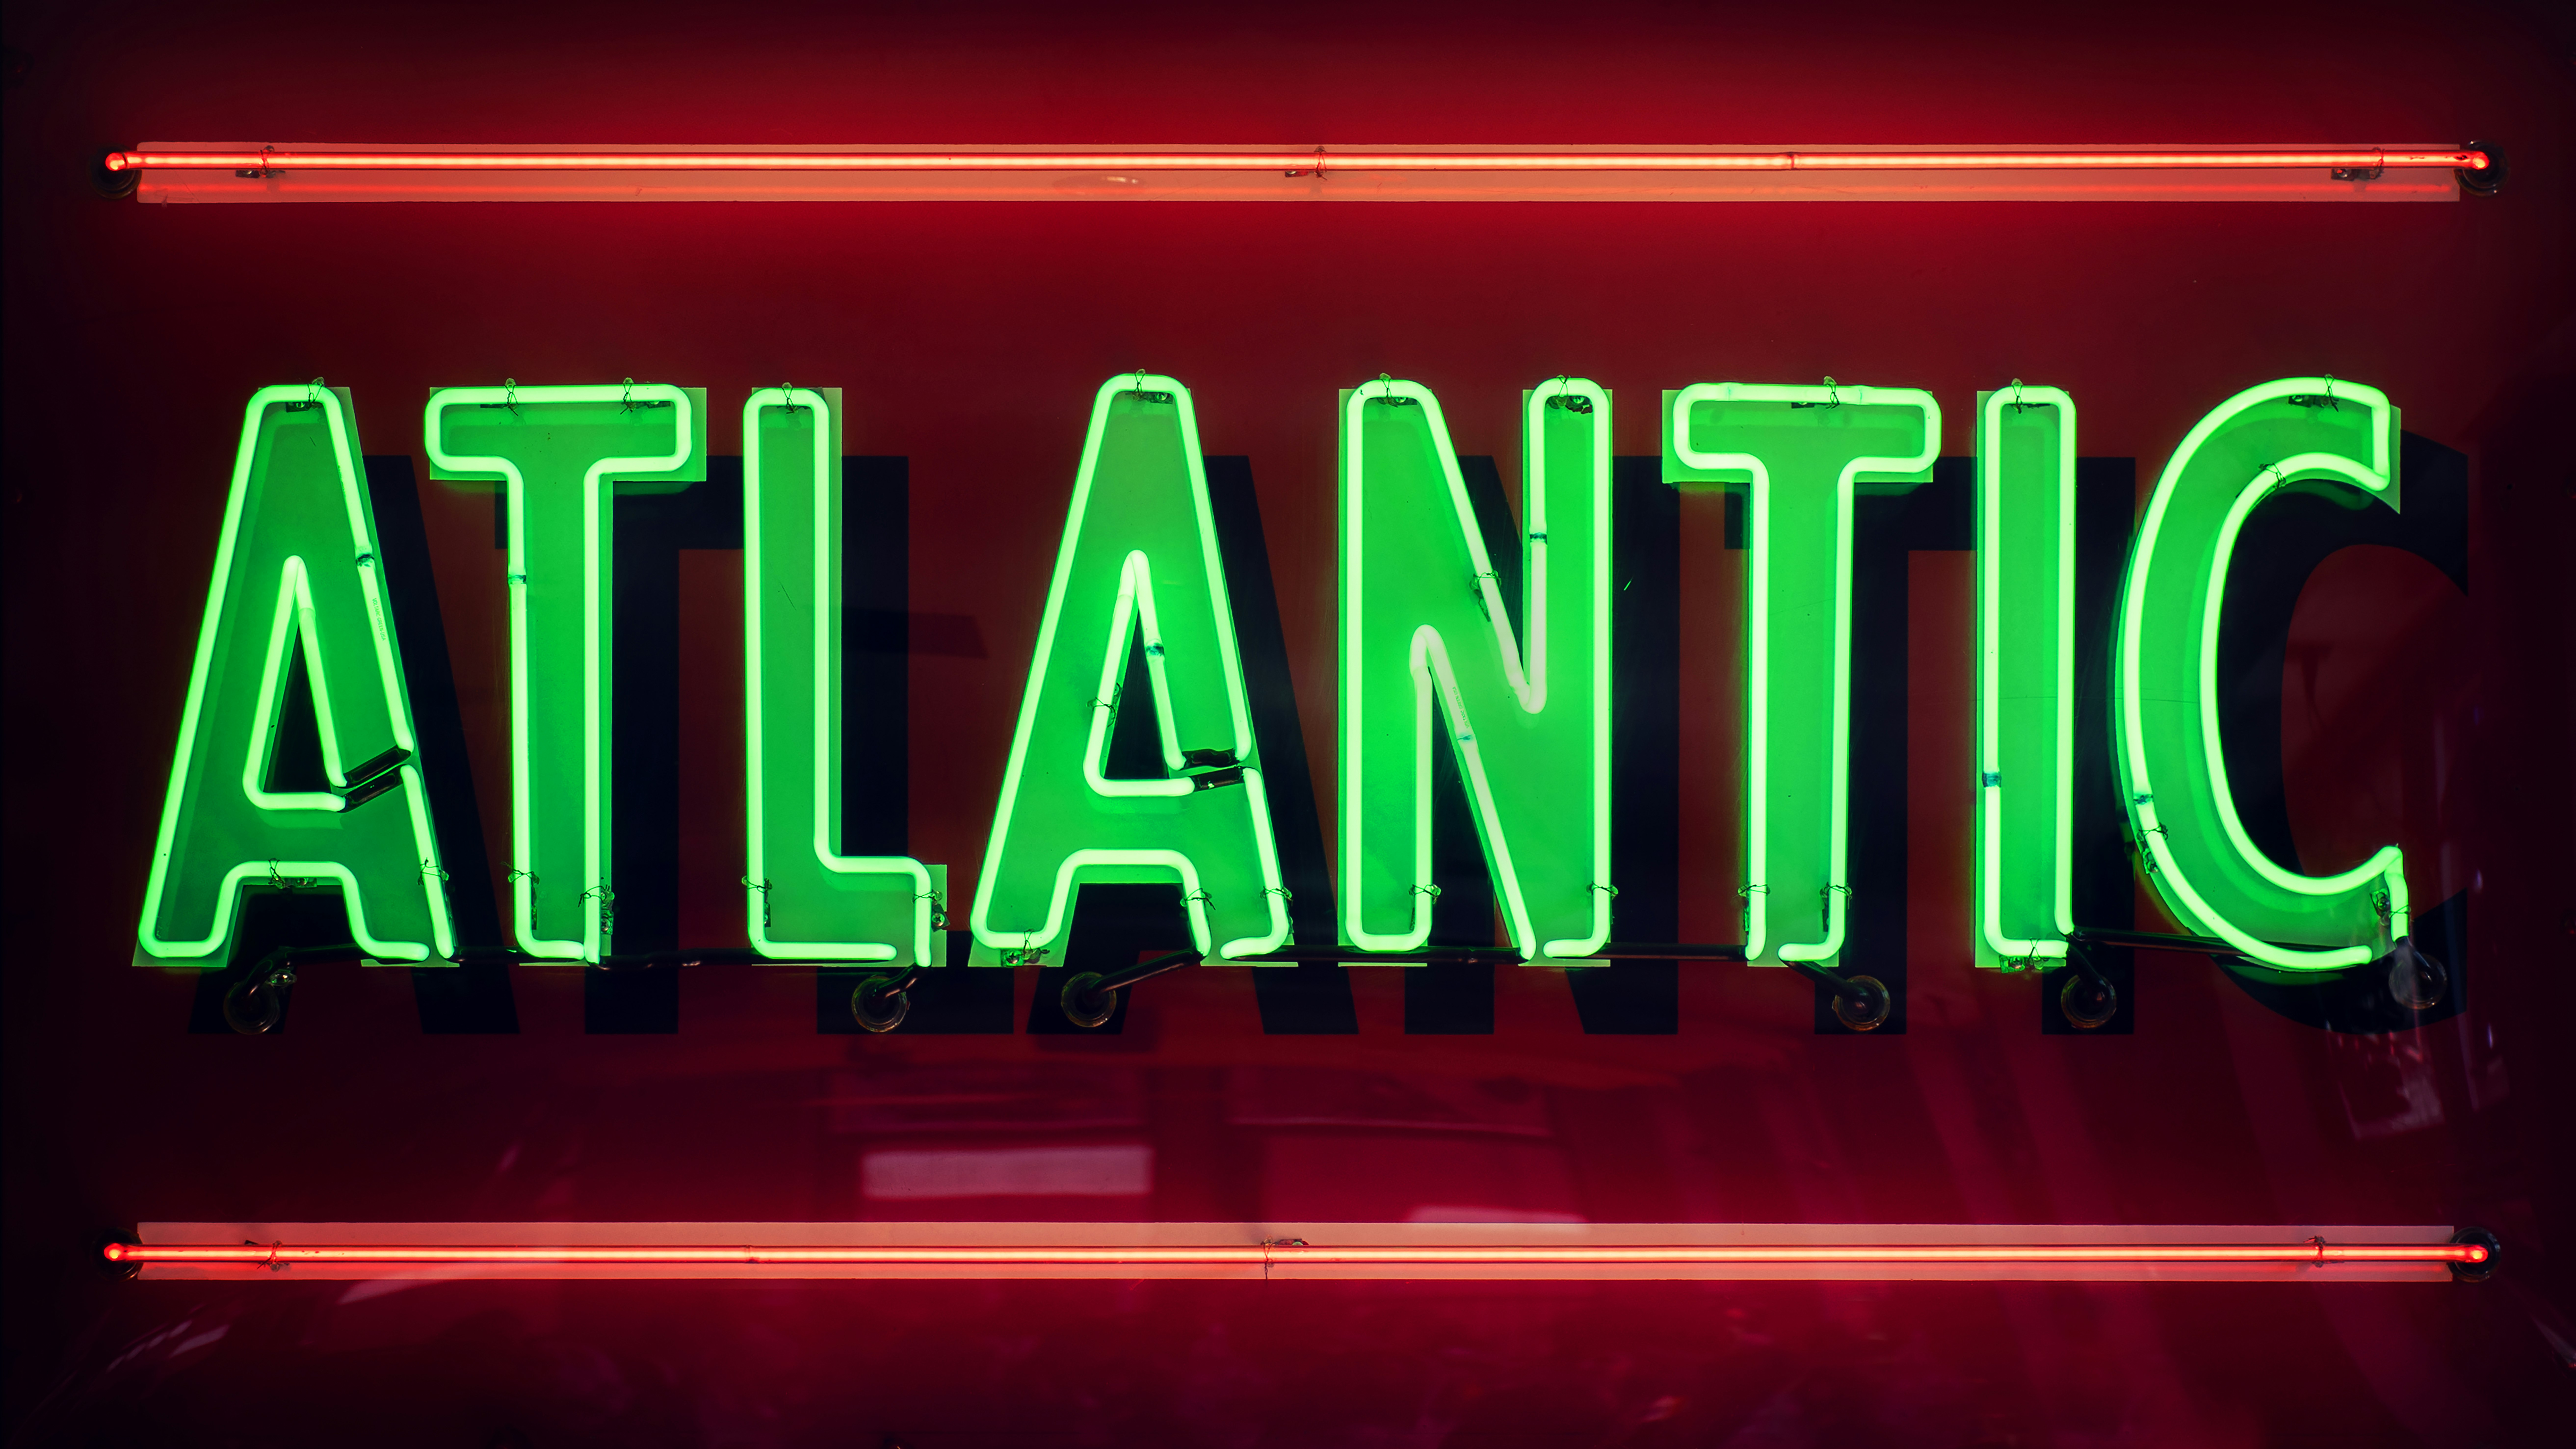 Atlantic neon sign